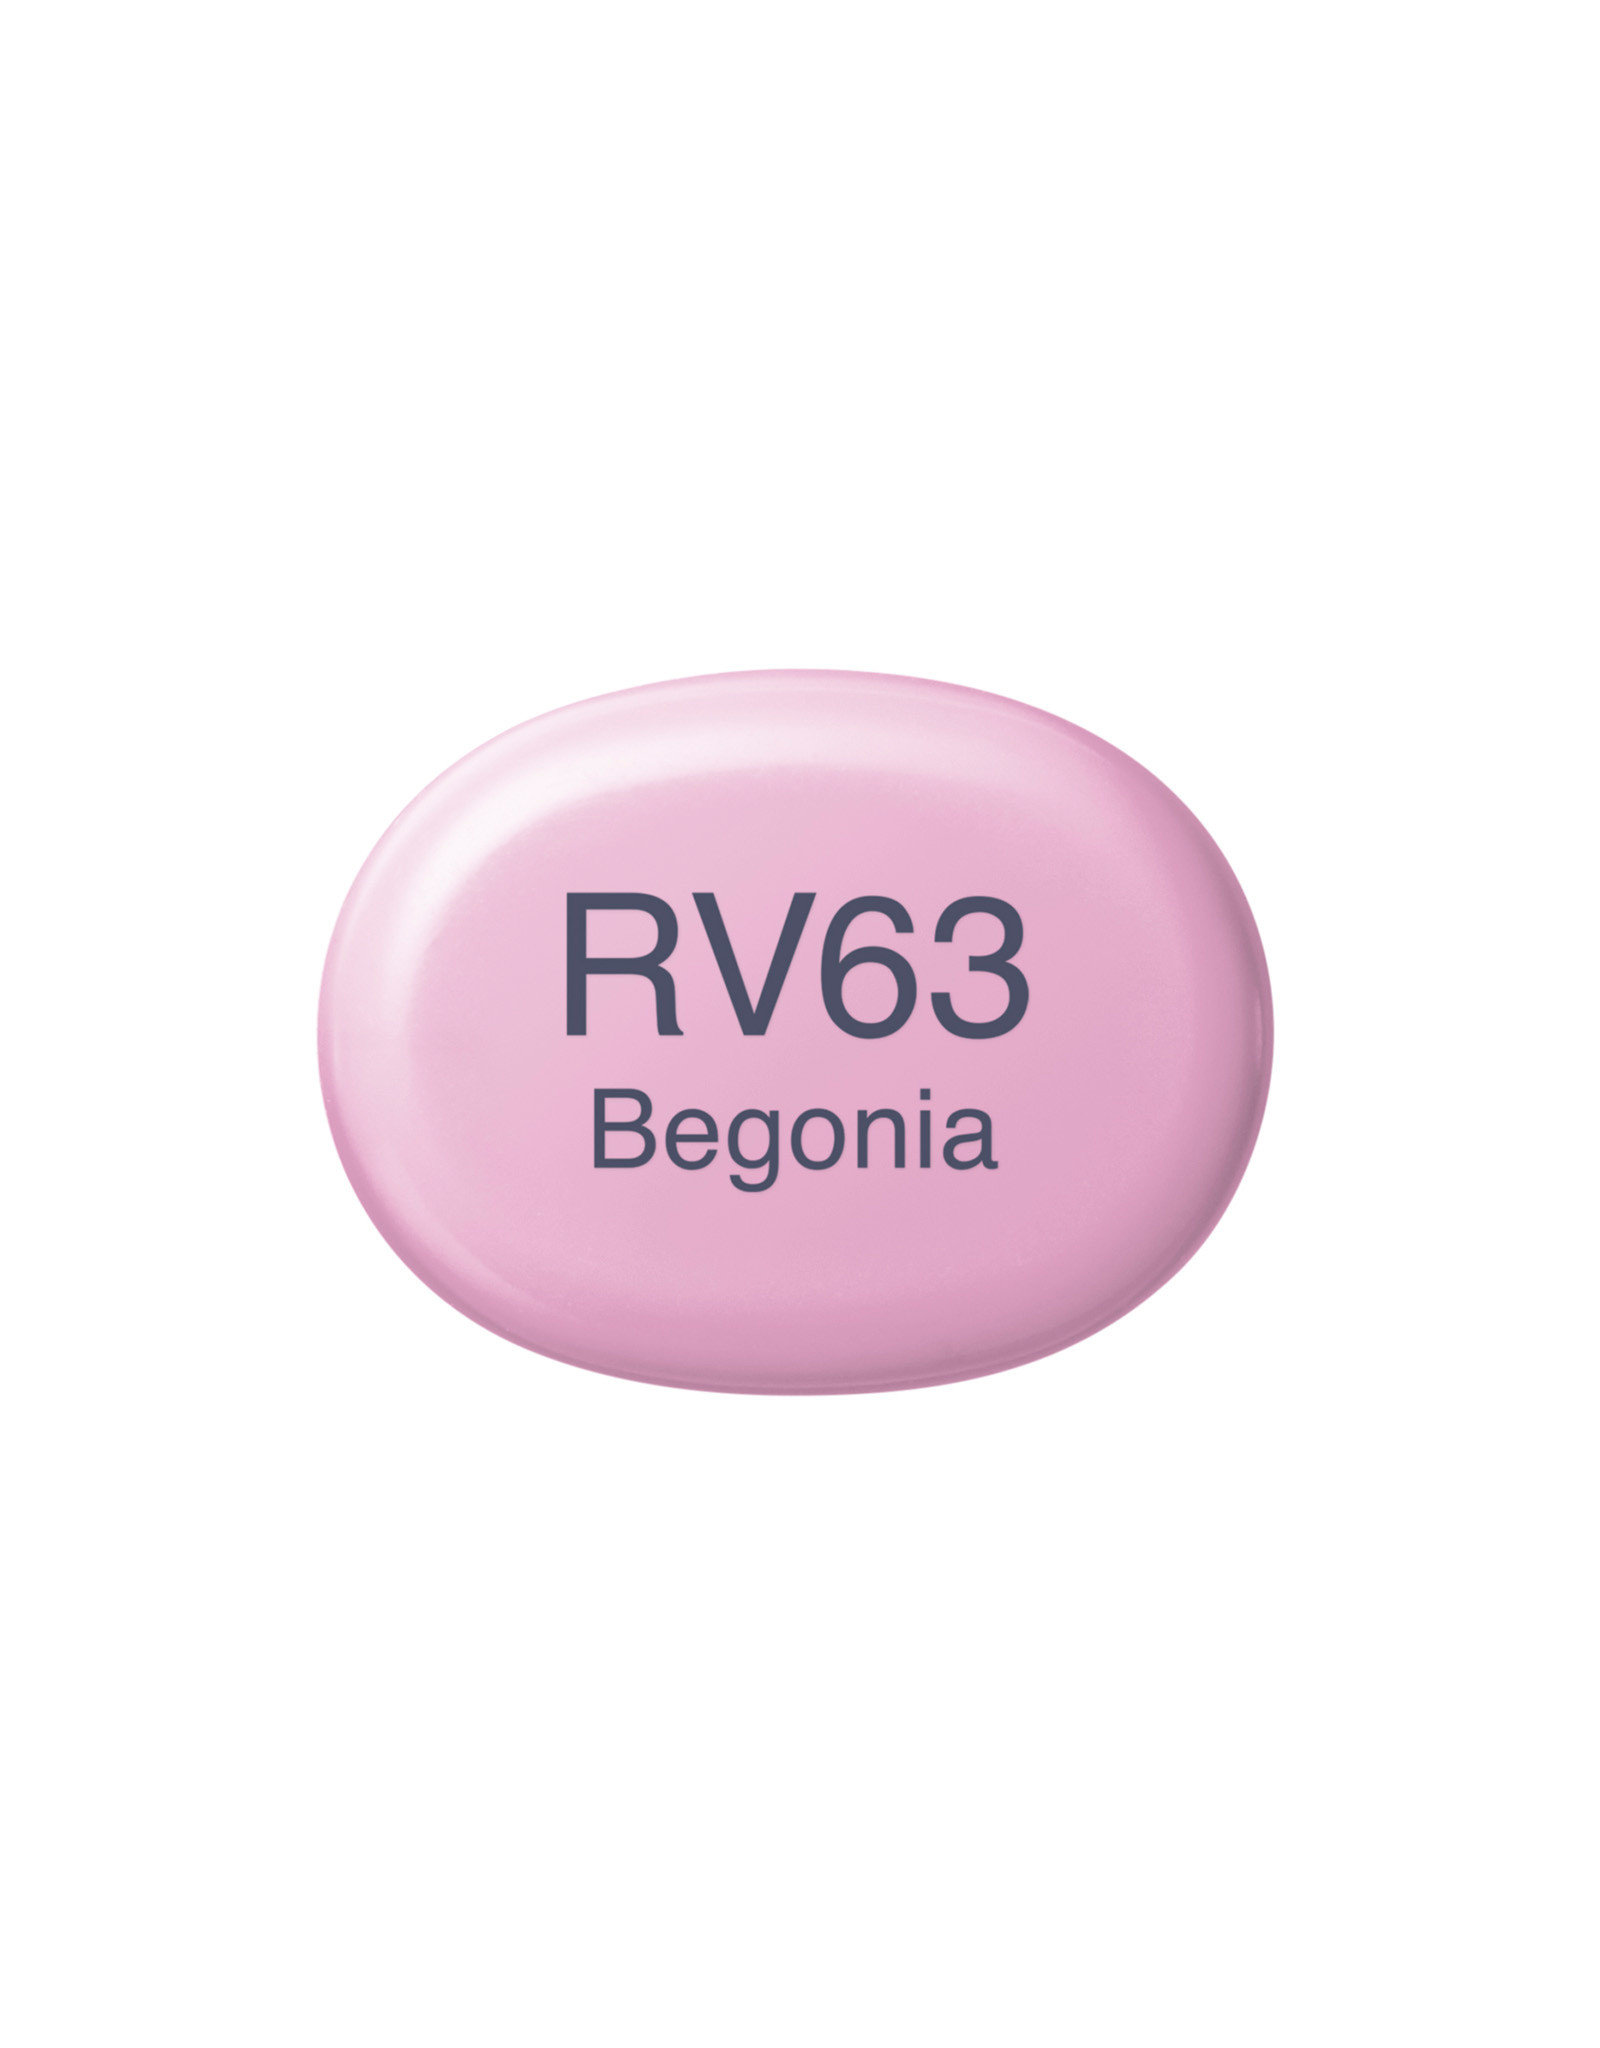 COPIC COPIC Sketch Marker RV63 Begonia